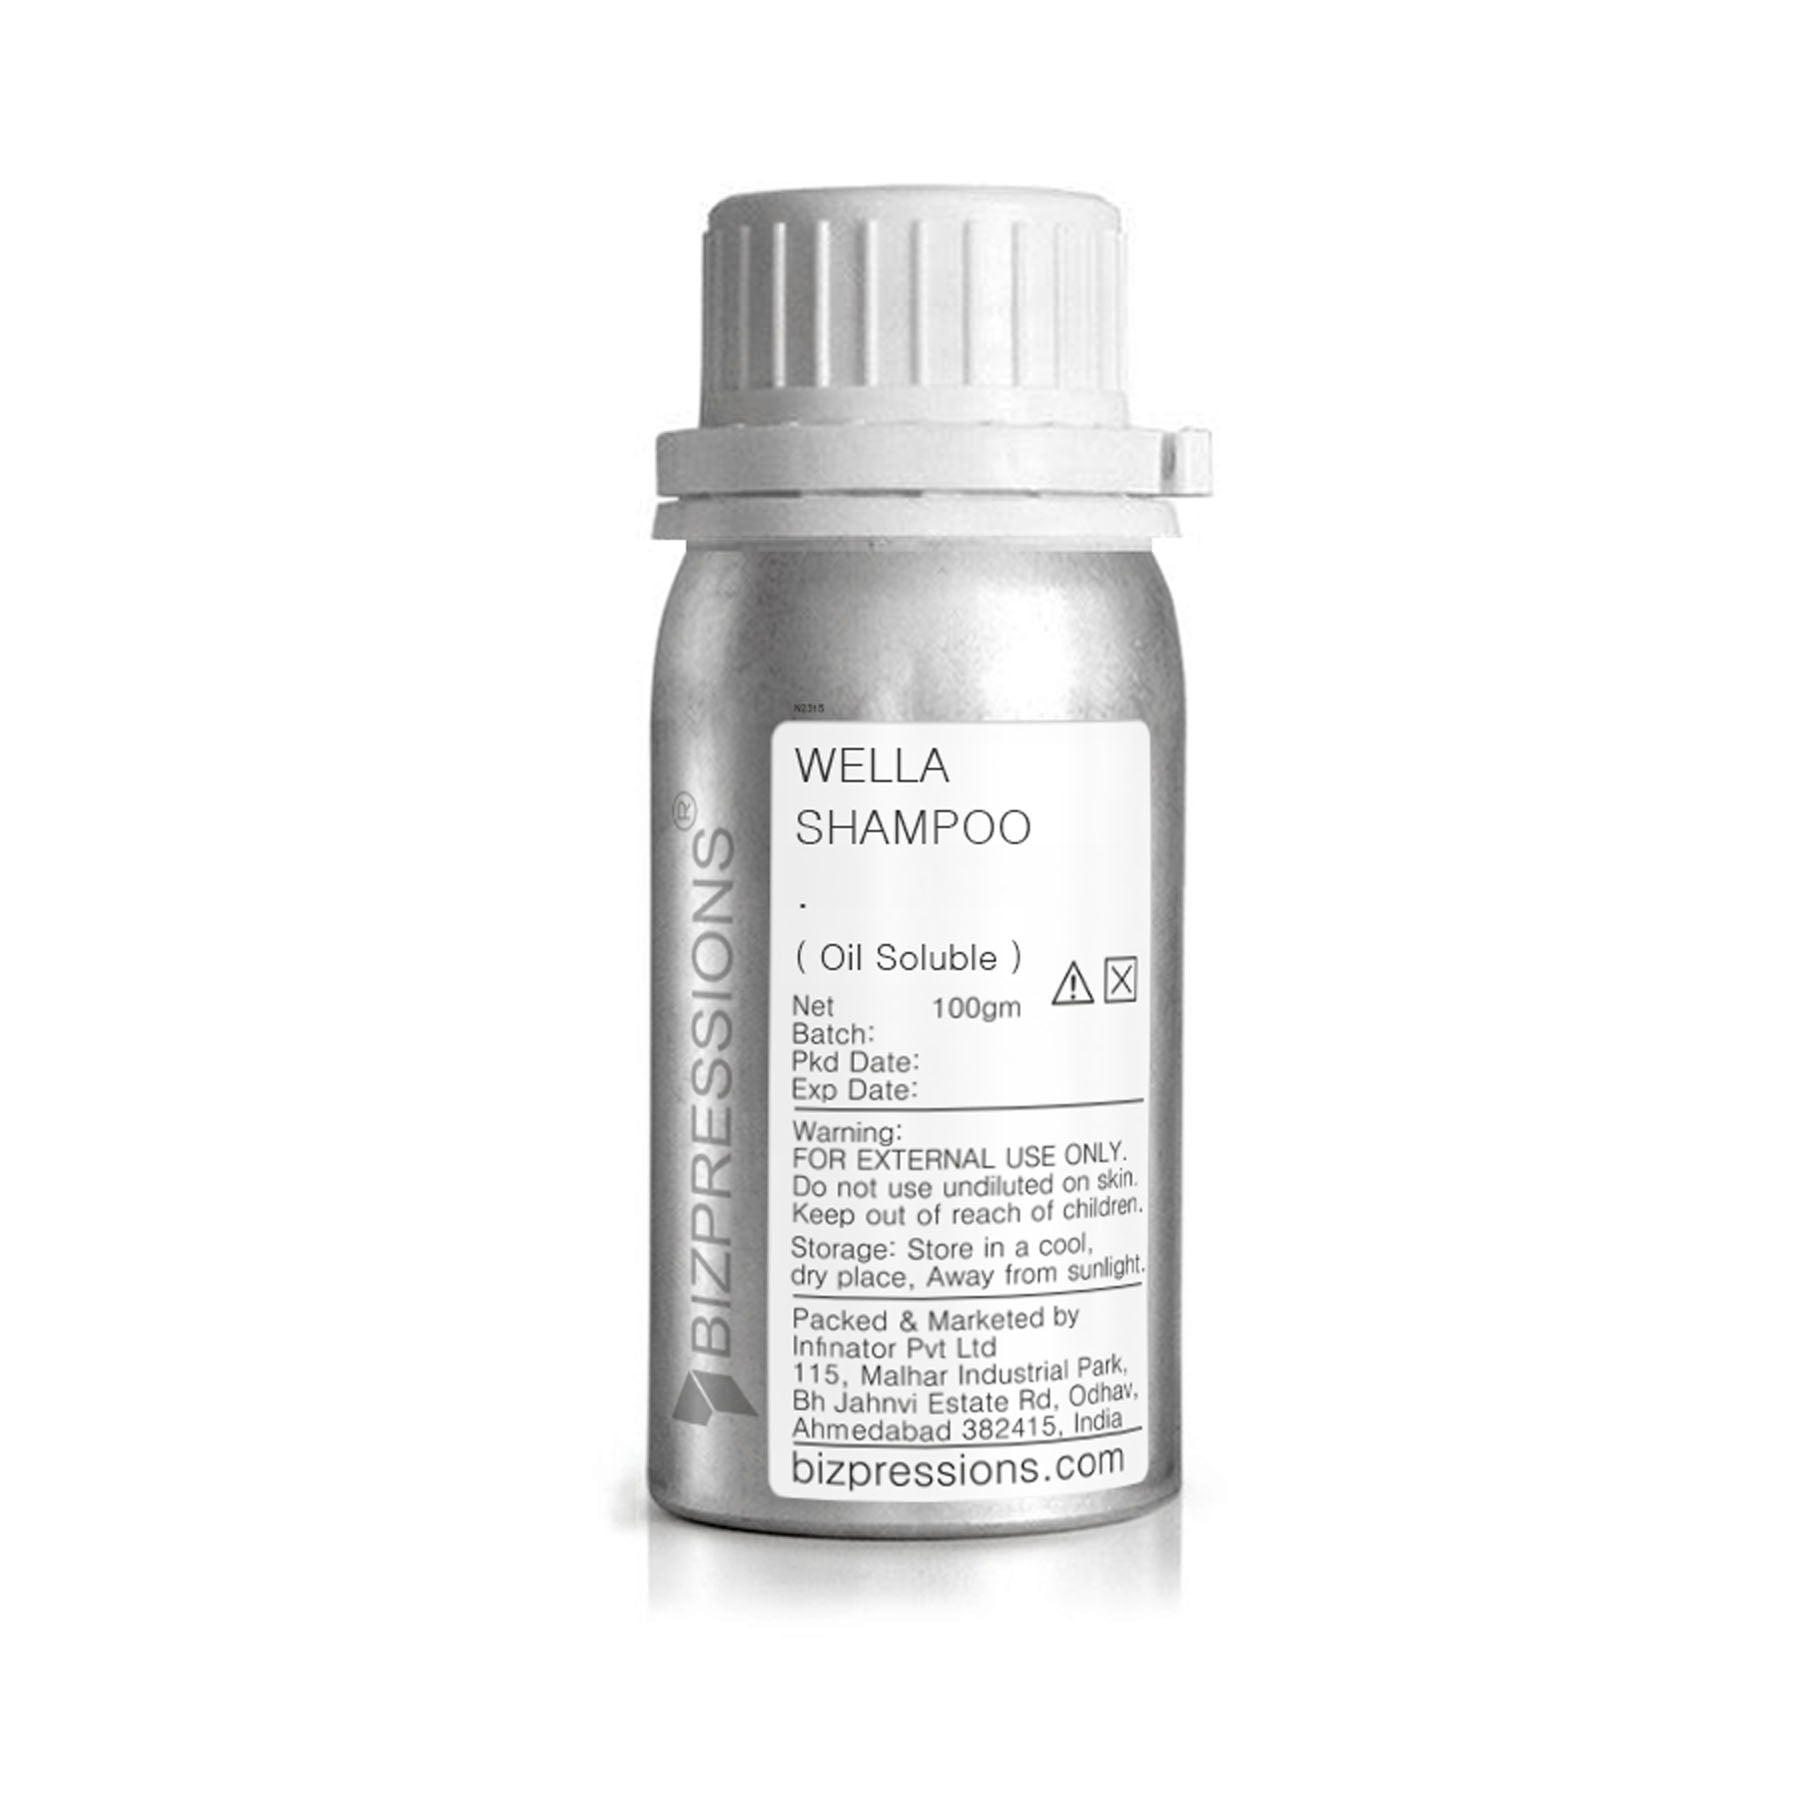 WELLA SHAMPOO - Fragrance ( Oil Soluble ) - 100 gm